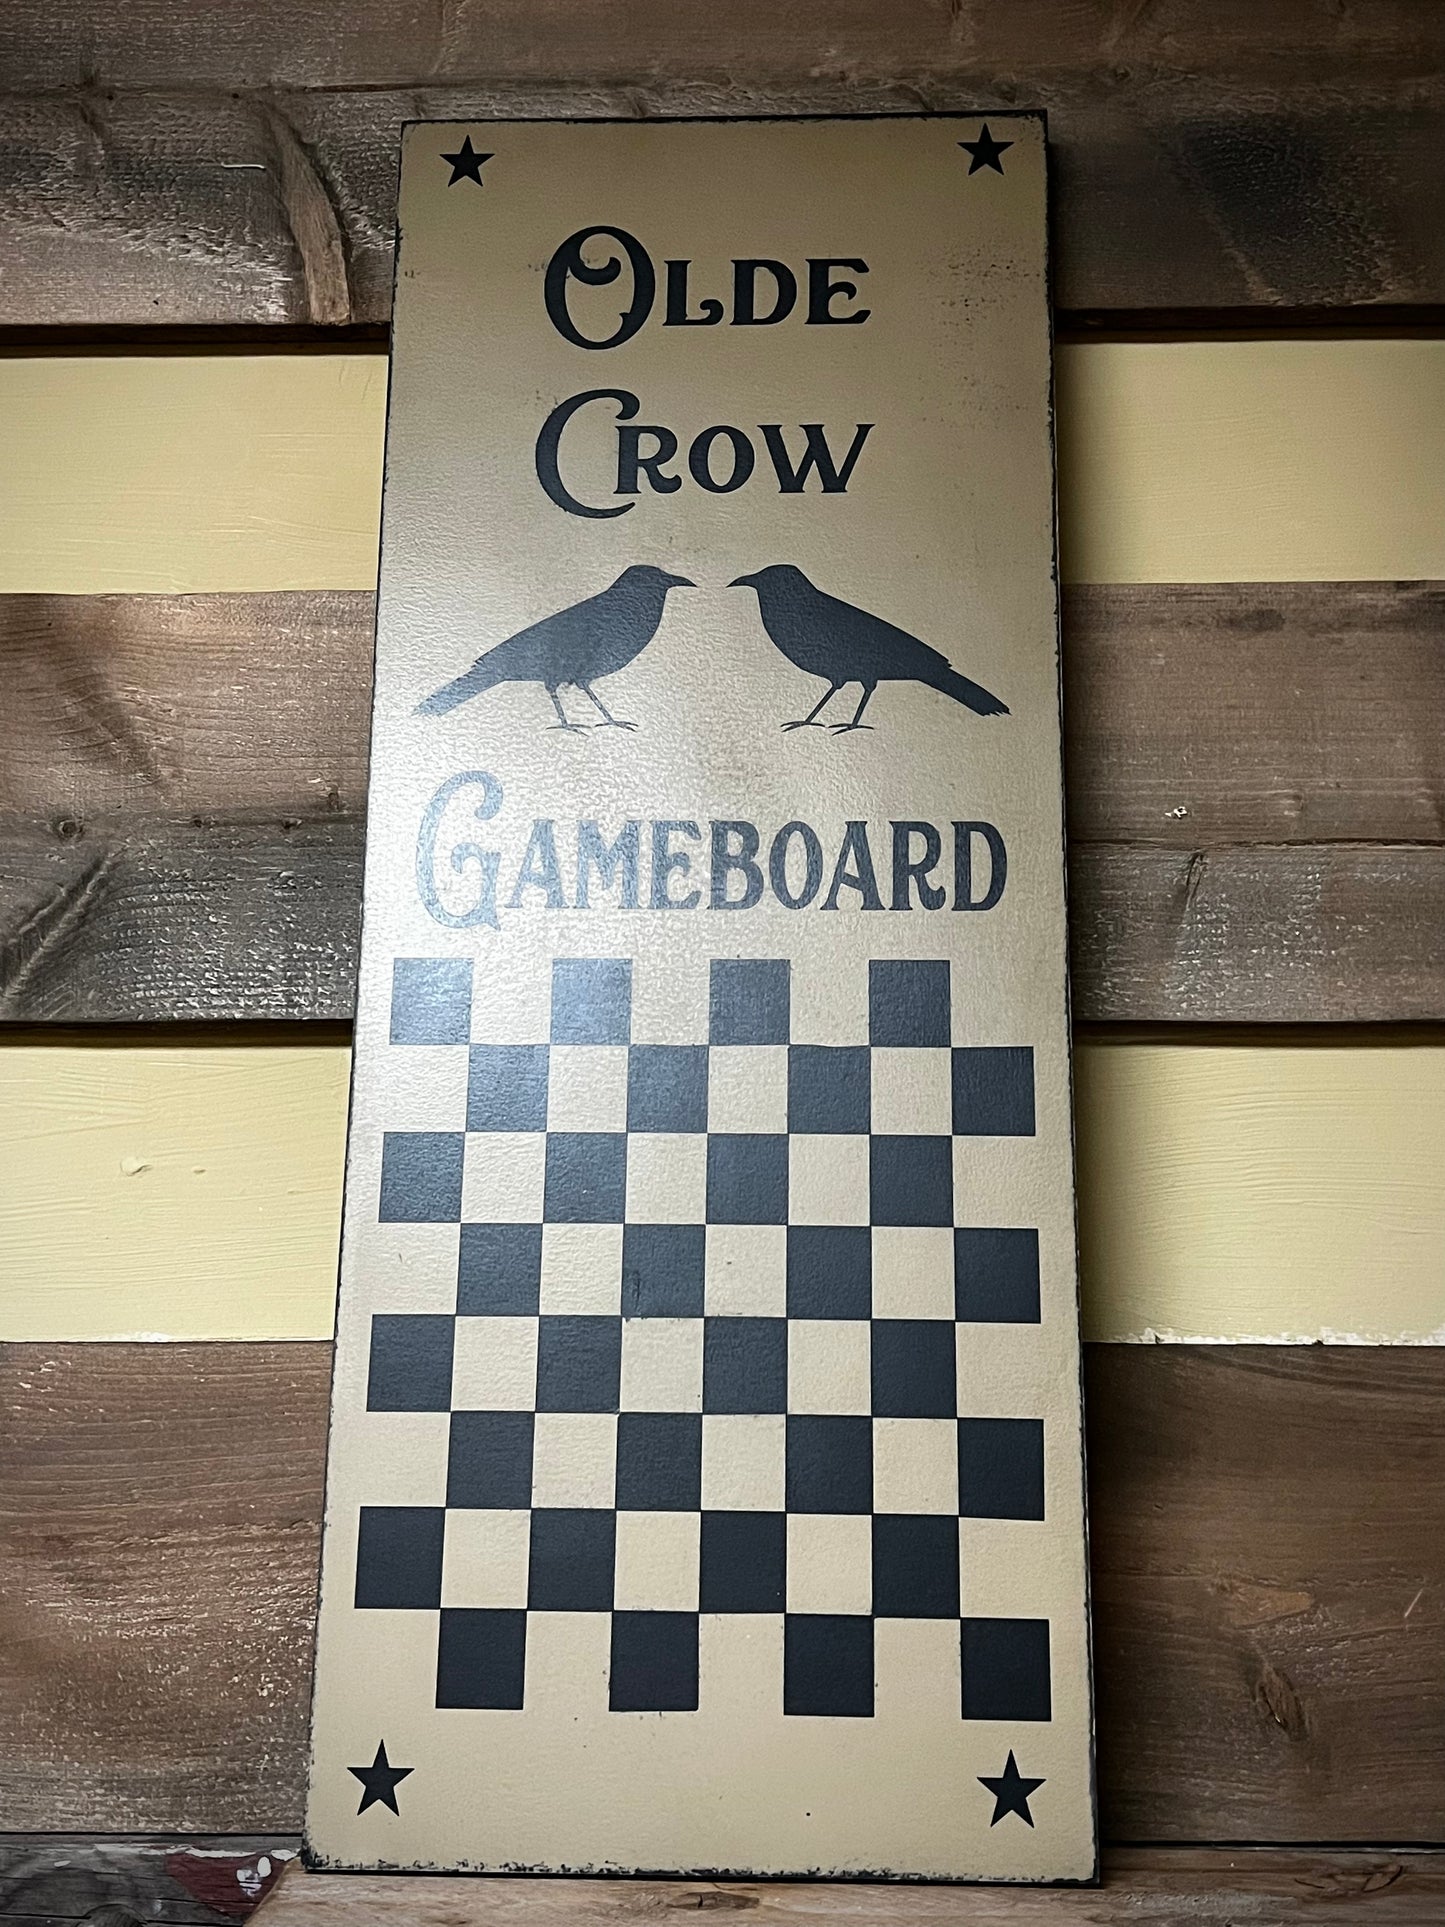 Gameboard, 11"x 28", OLDE CROW